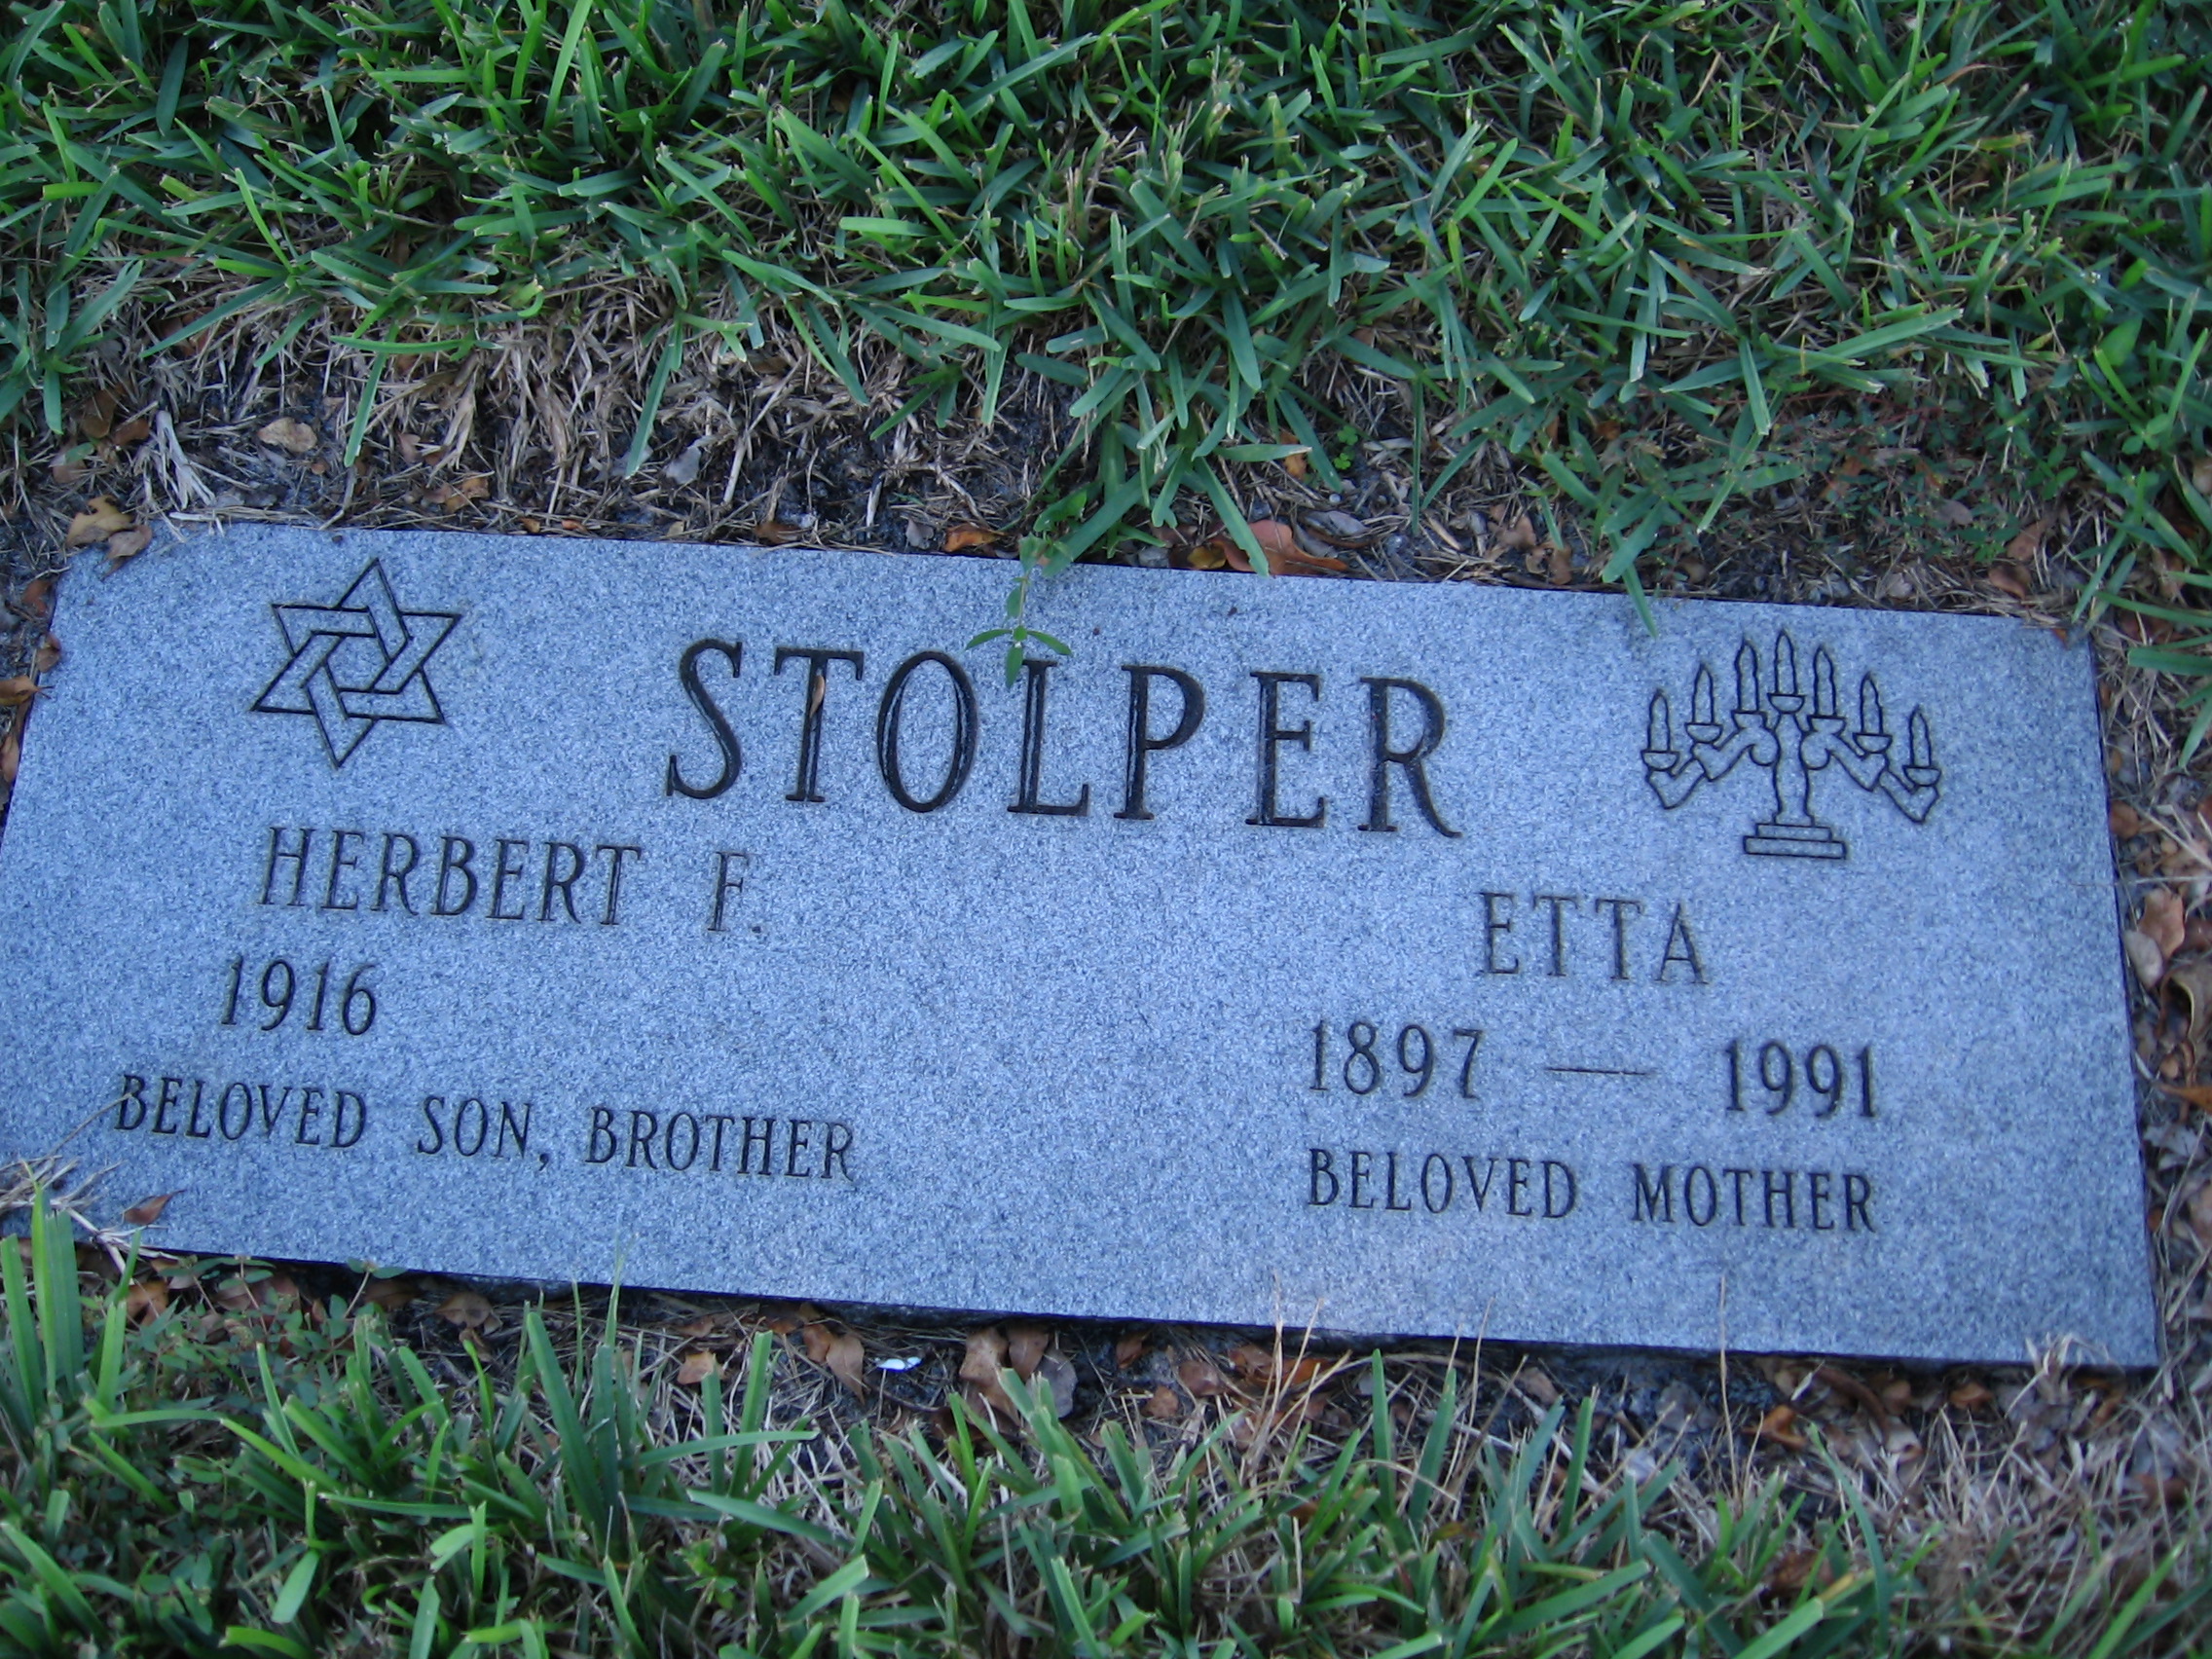 Herbert F Stolper